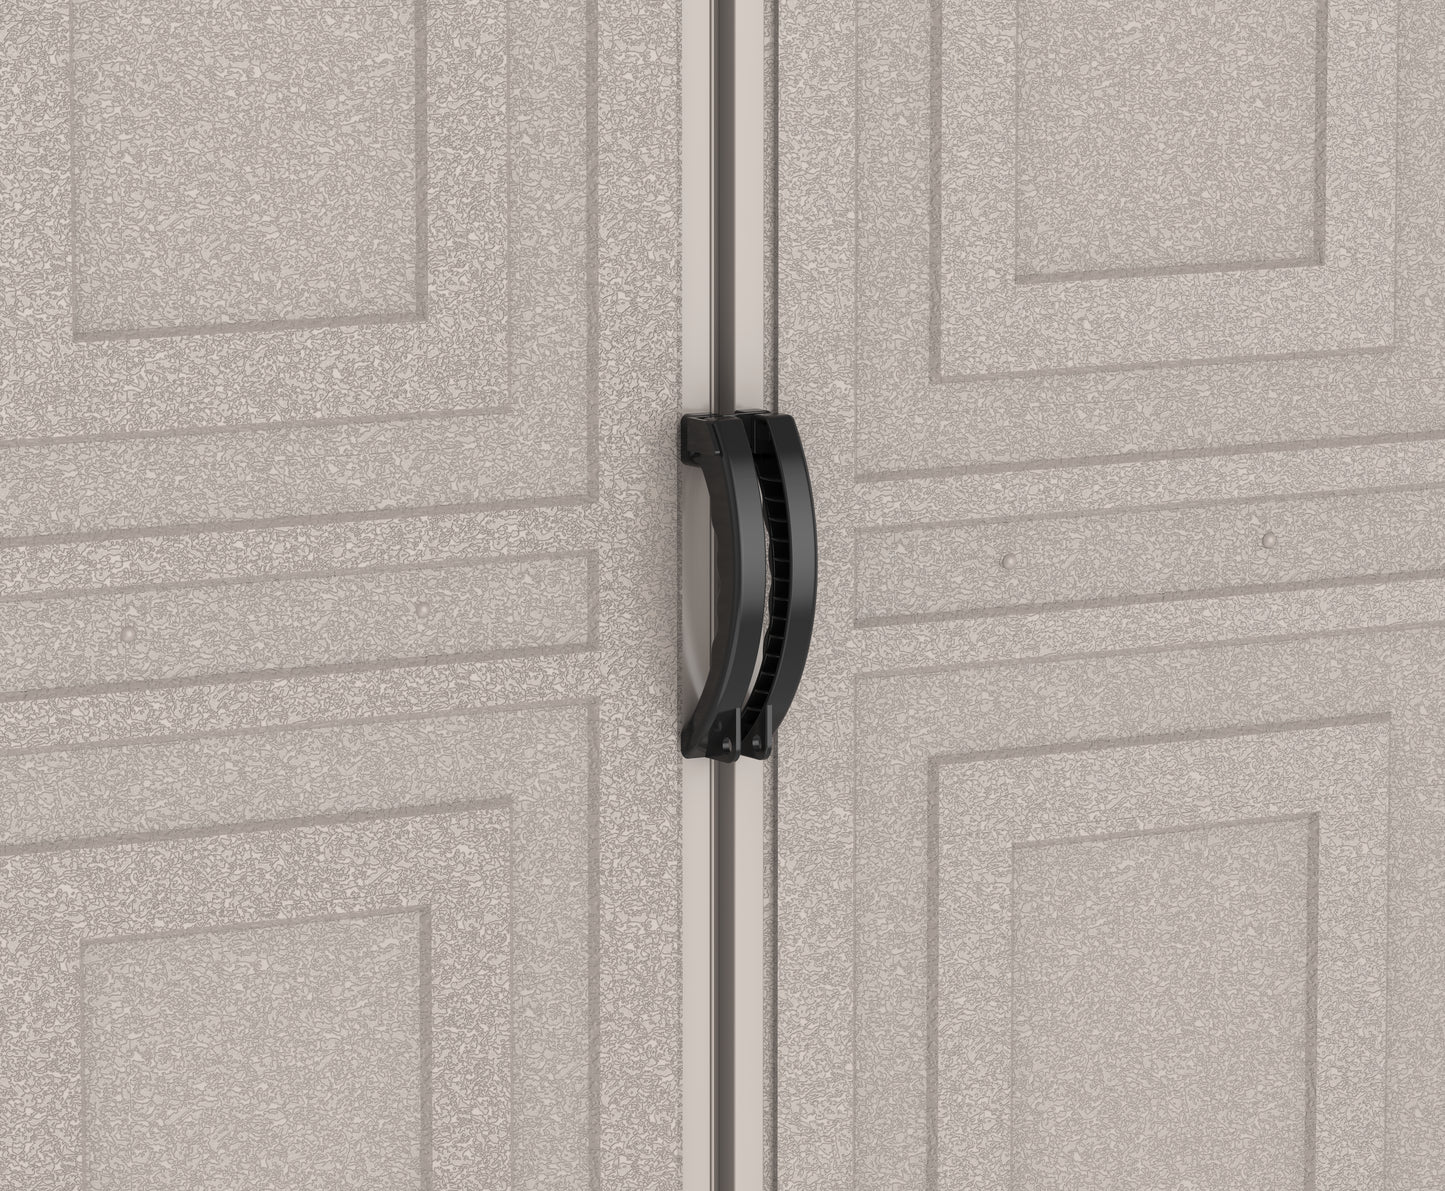 Duramax Vinyl Garage 10.5x31 w/ Foundation 2 Windows 15626 close up of door handle